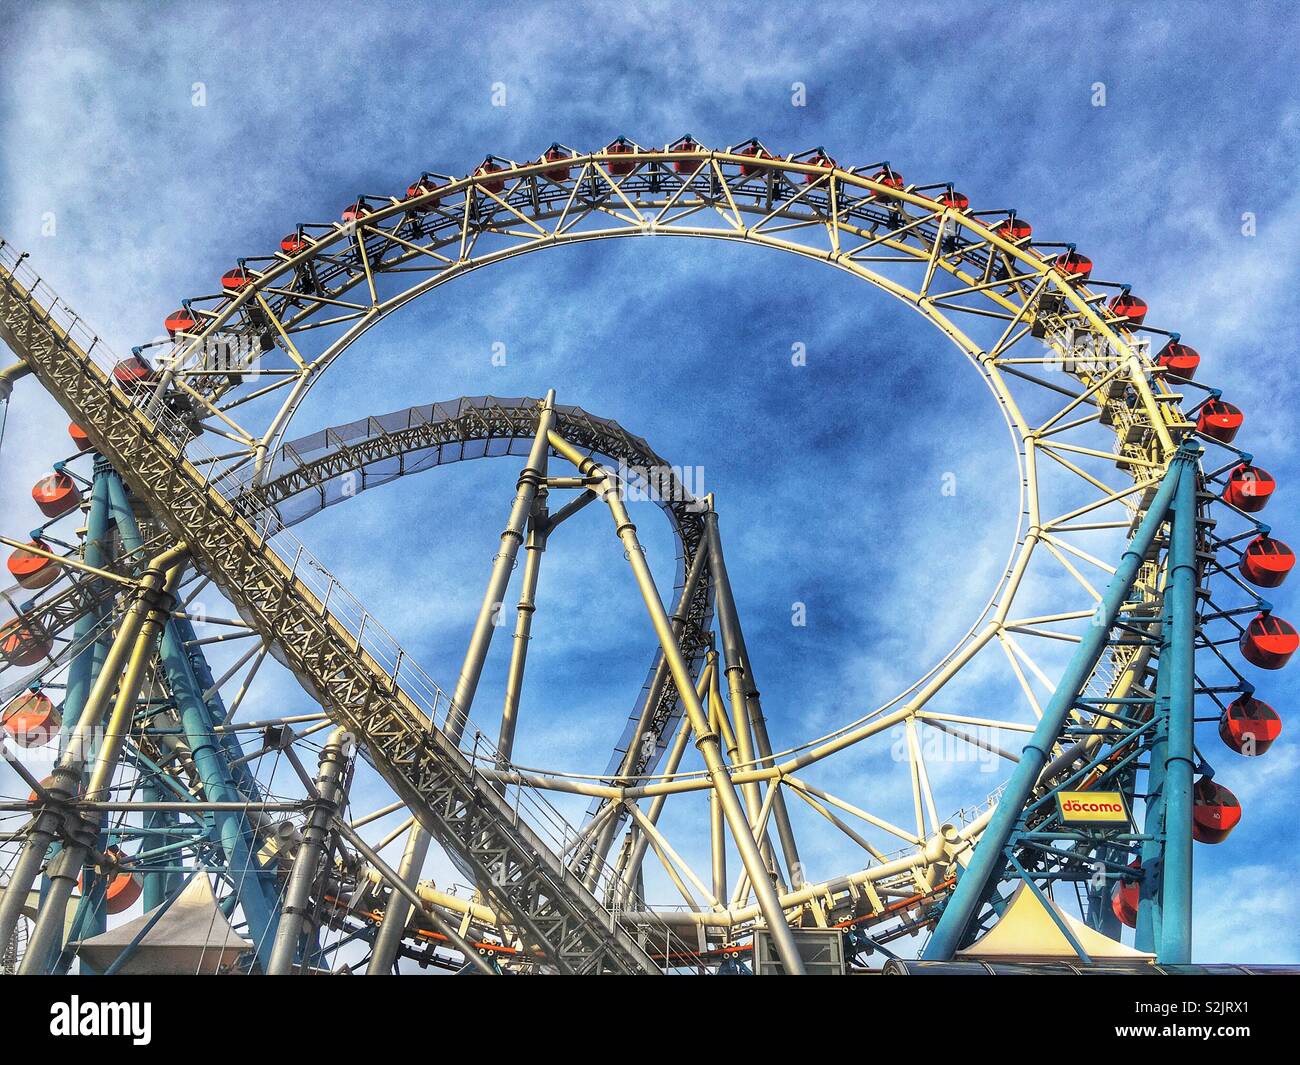 Ferris wheel of Aqua City in Bunkyo, Tokyo Stock Photo